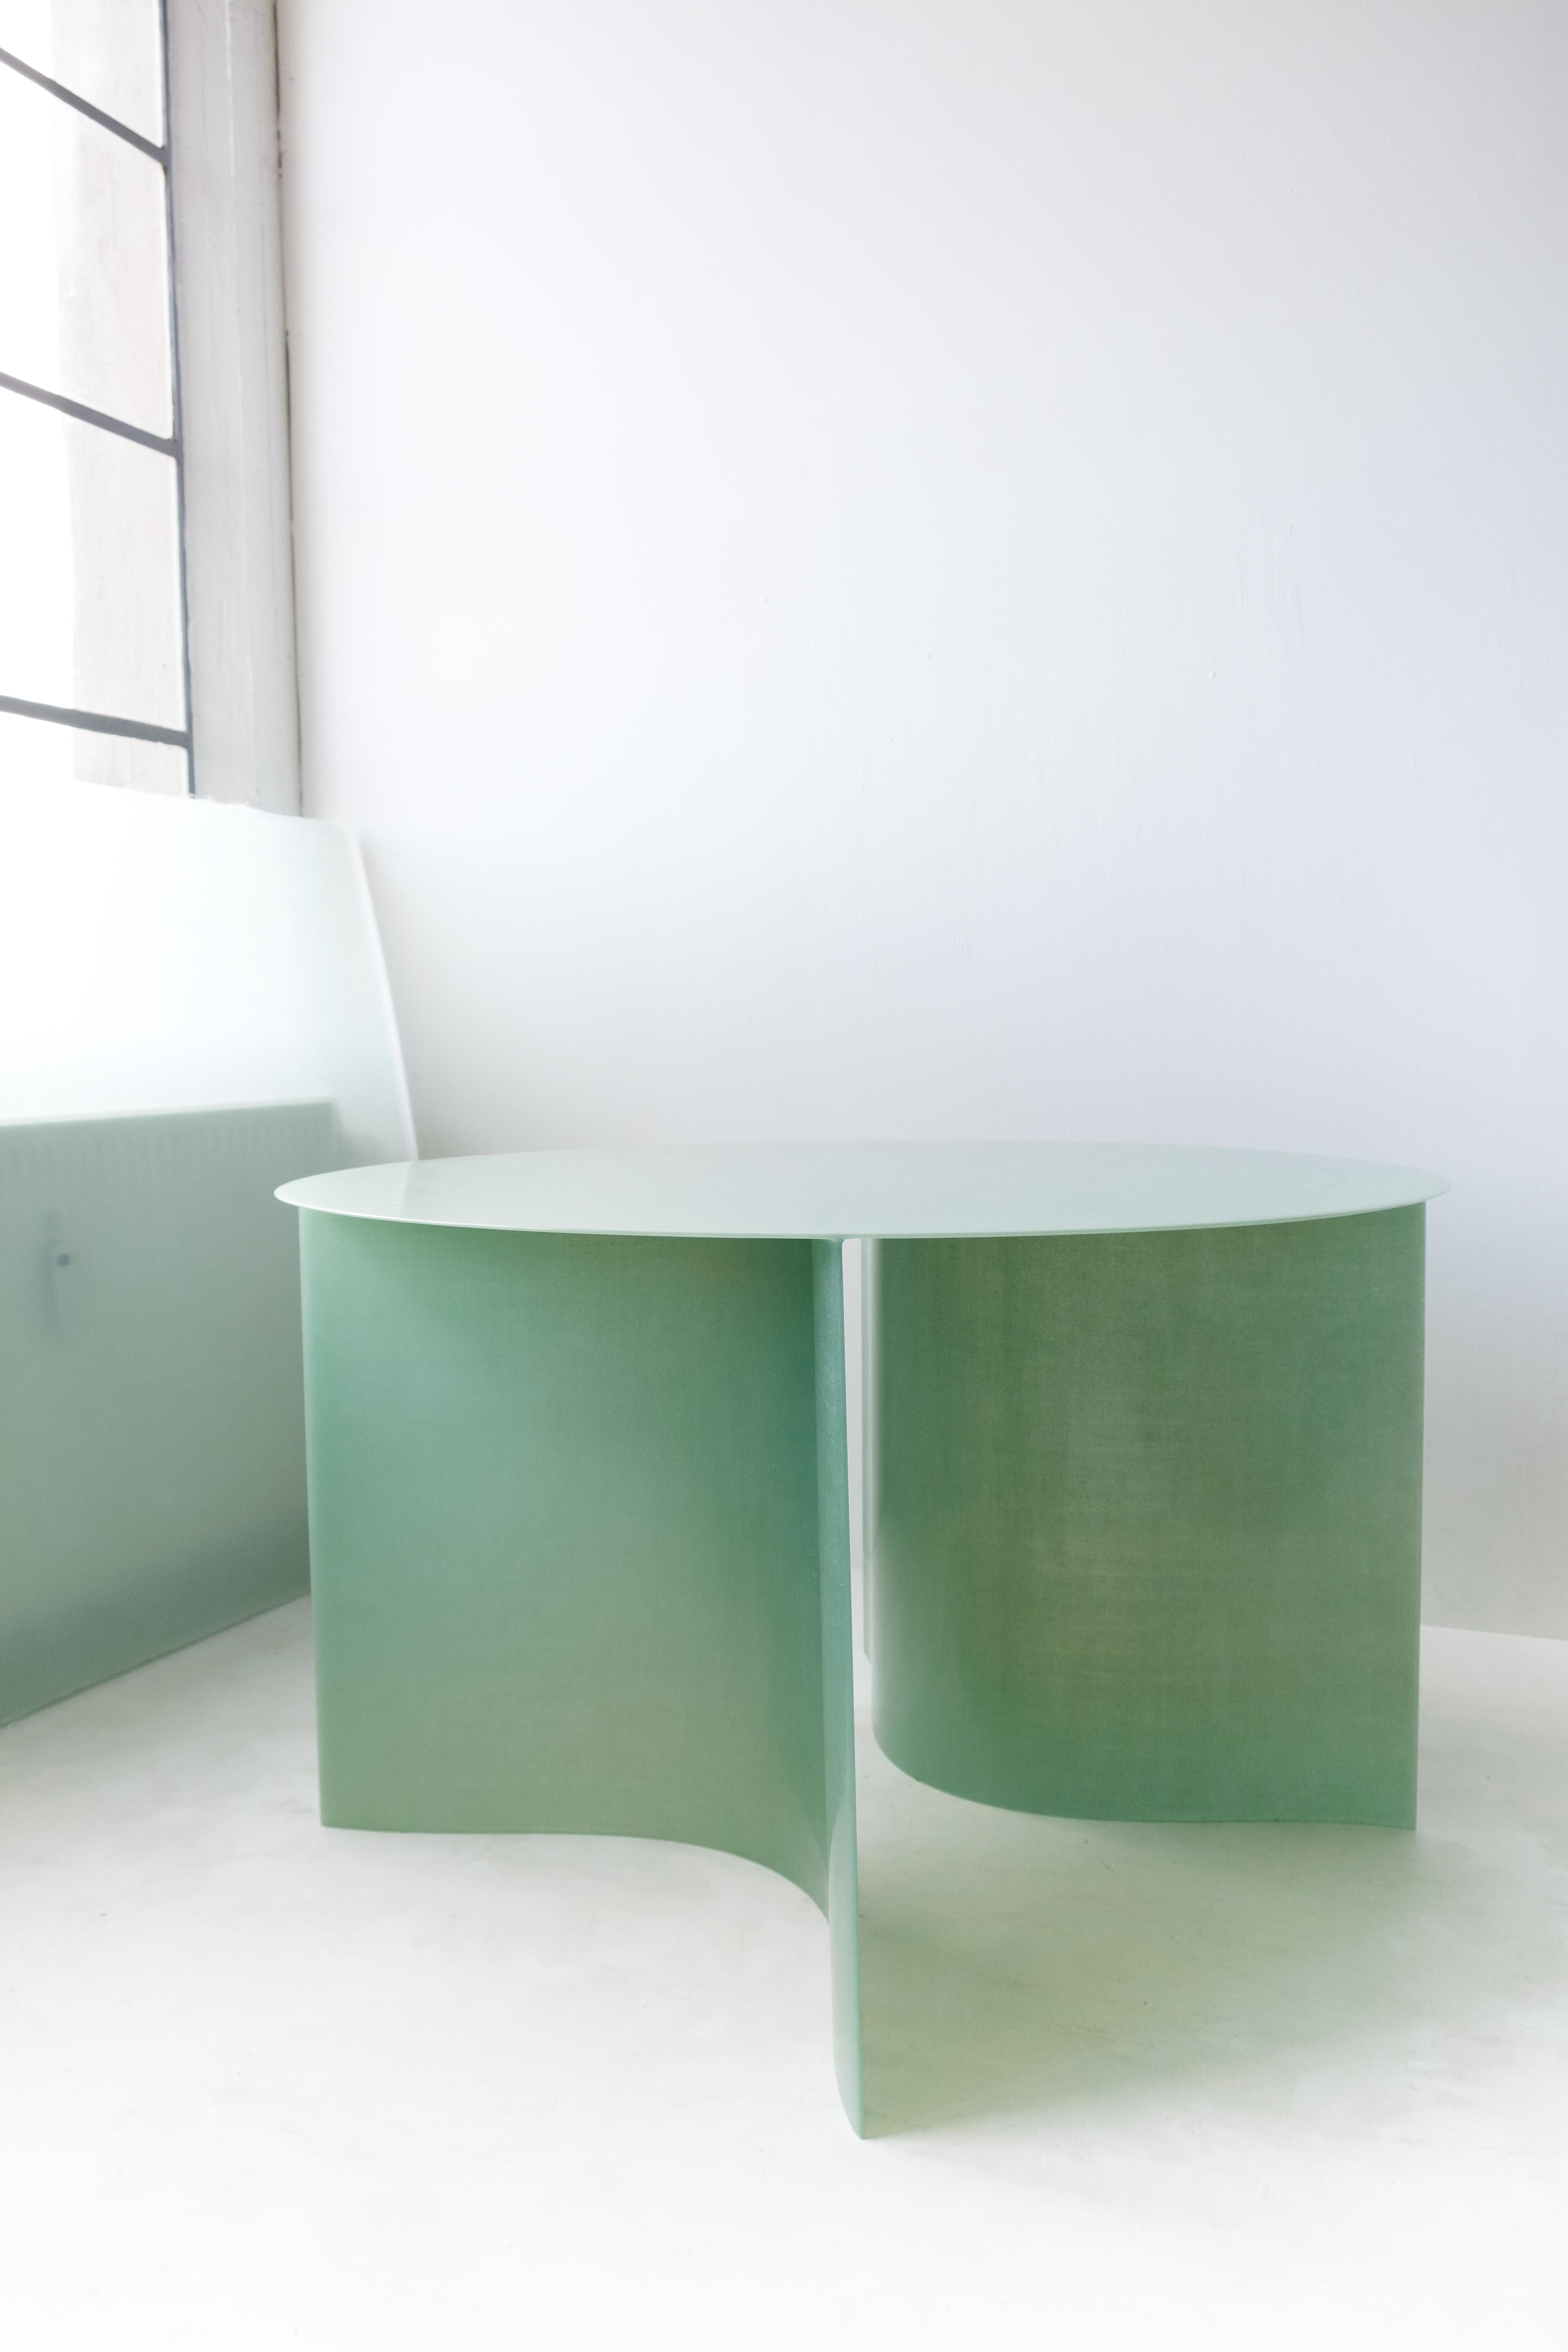 Dutch Contemporary Light Green Fiberglass, New Wave Dining Table 150 D, by Lukas Cober